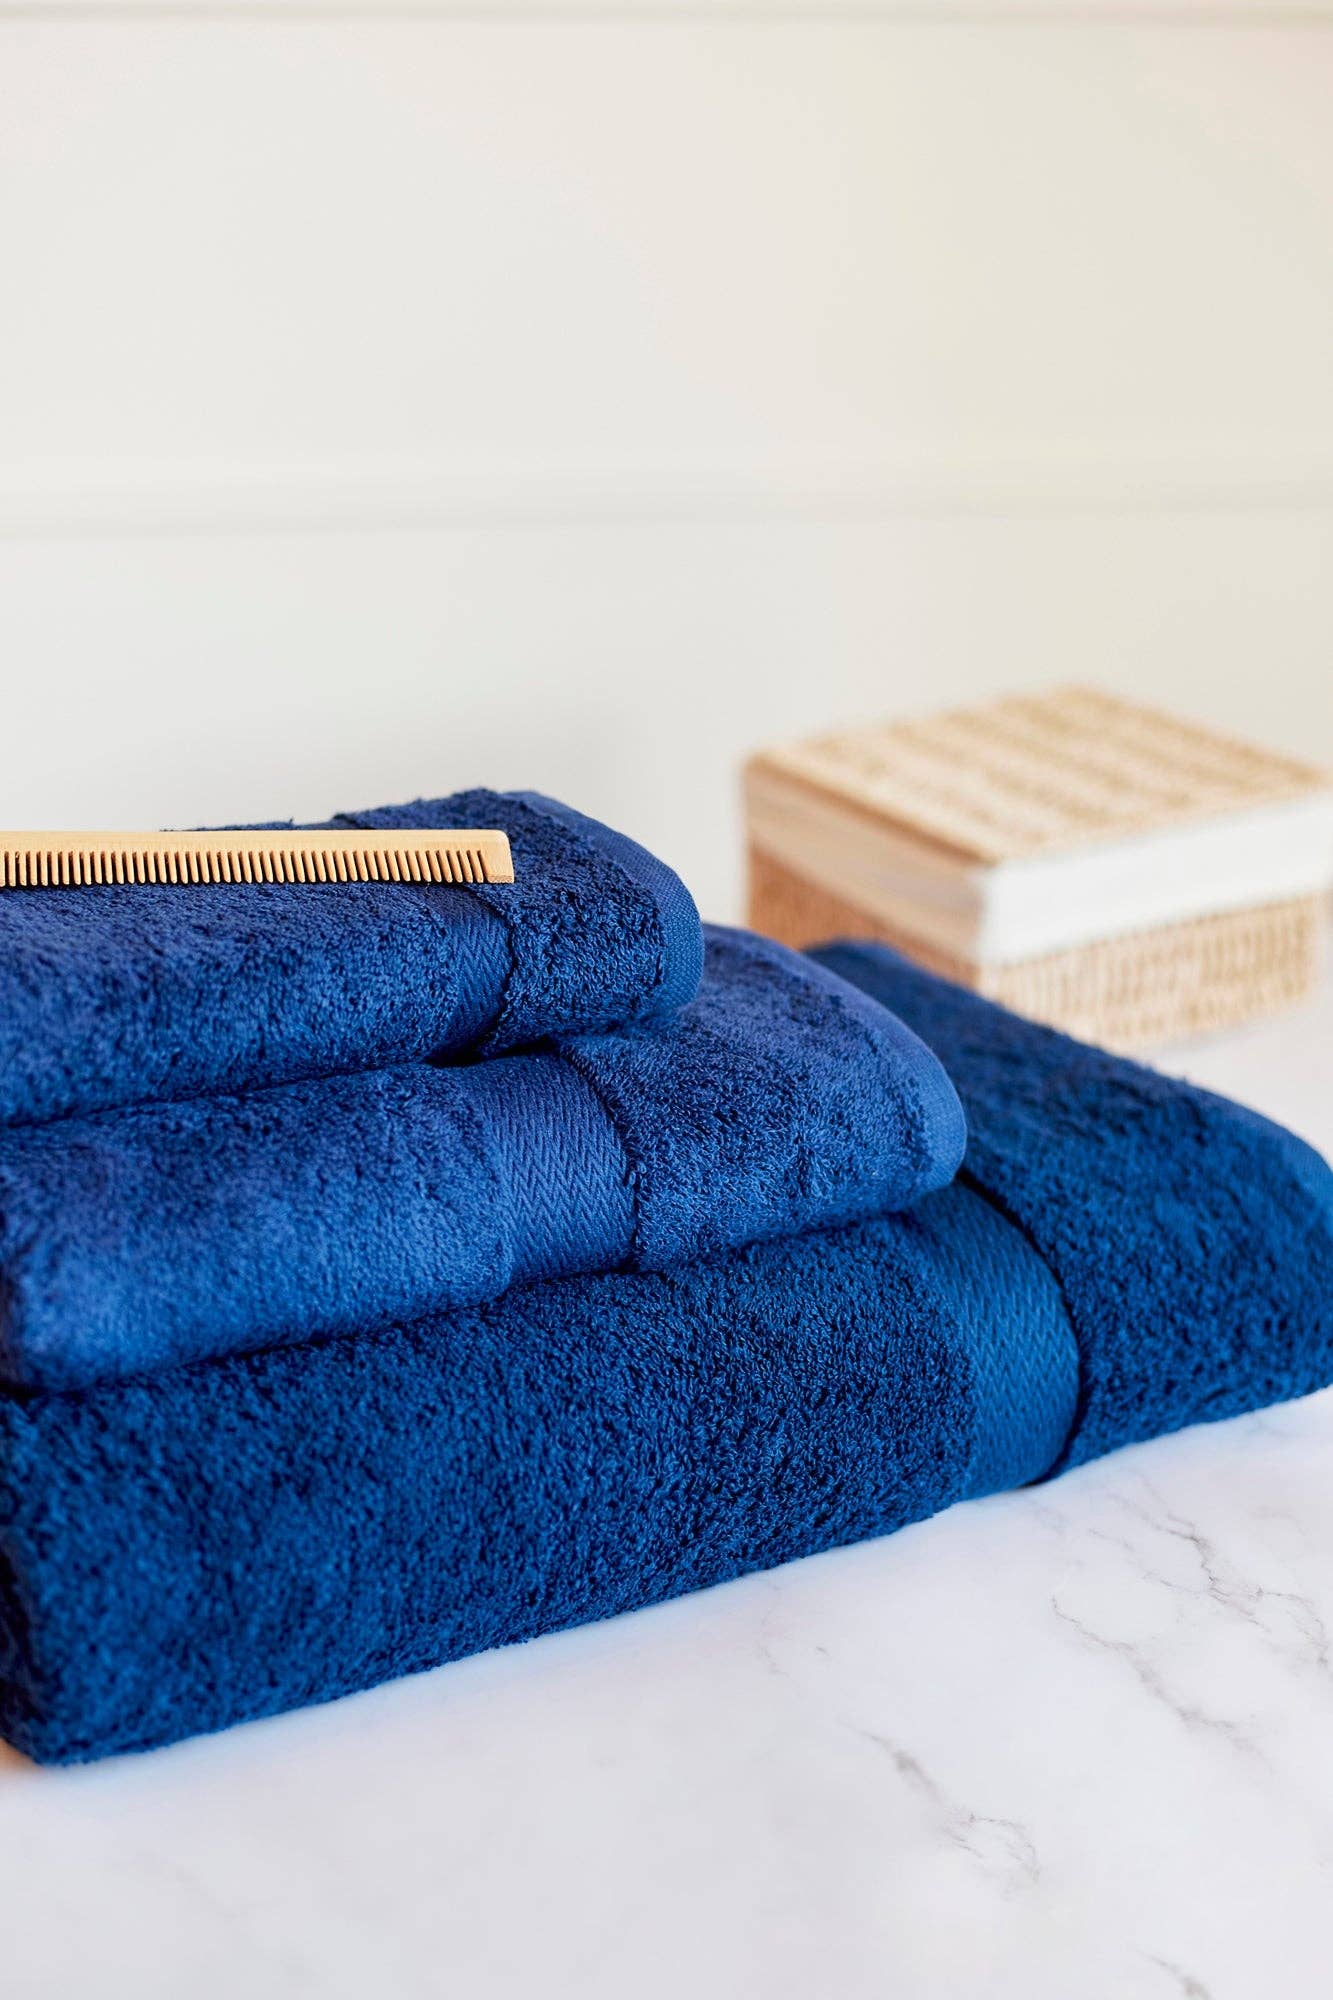 cobalt blue organic cotton towels on a bathroom counter